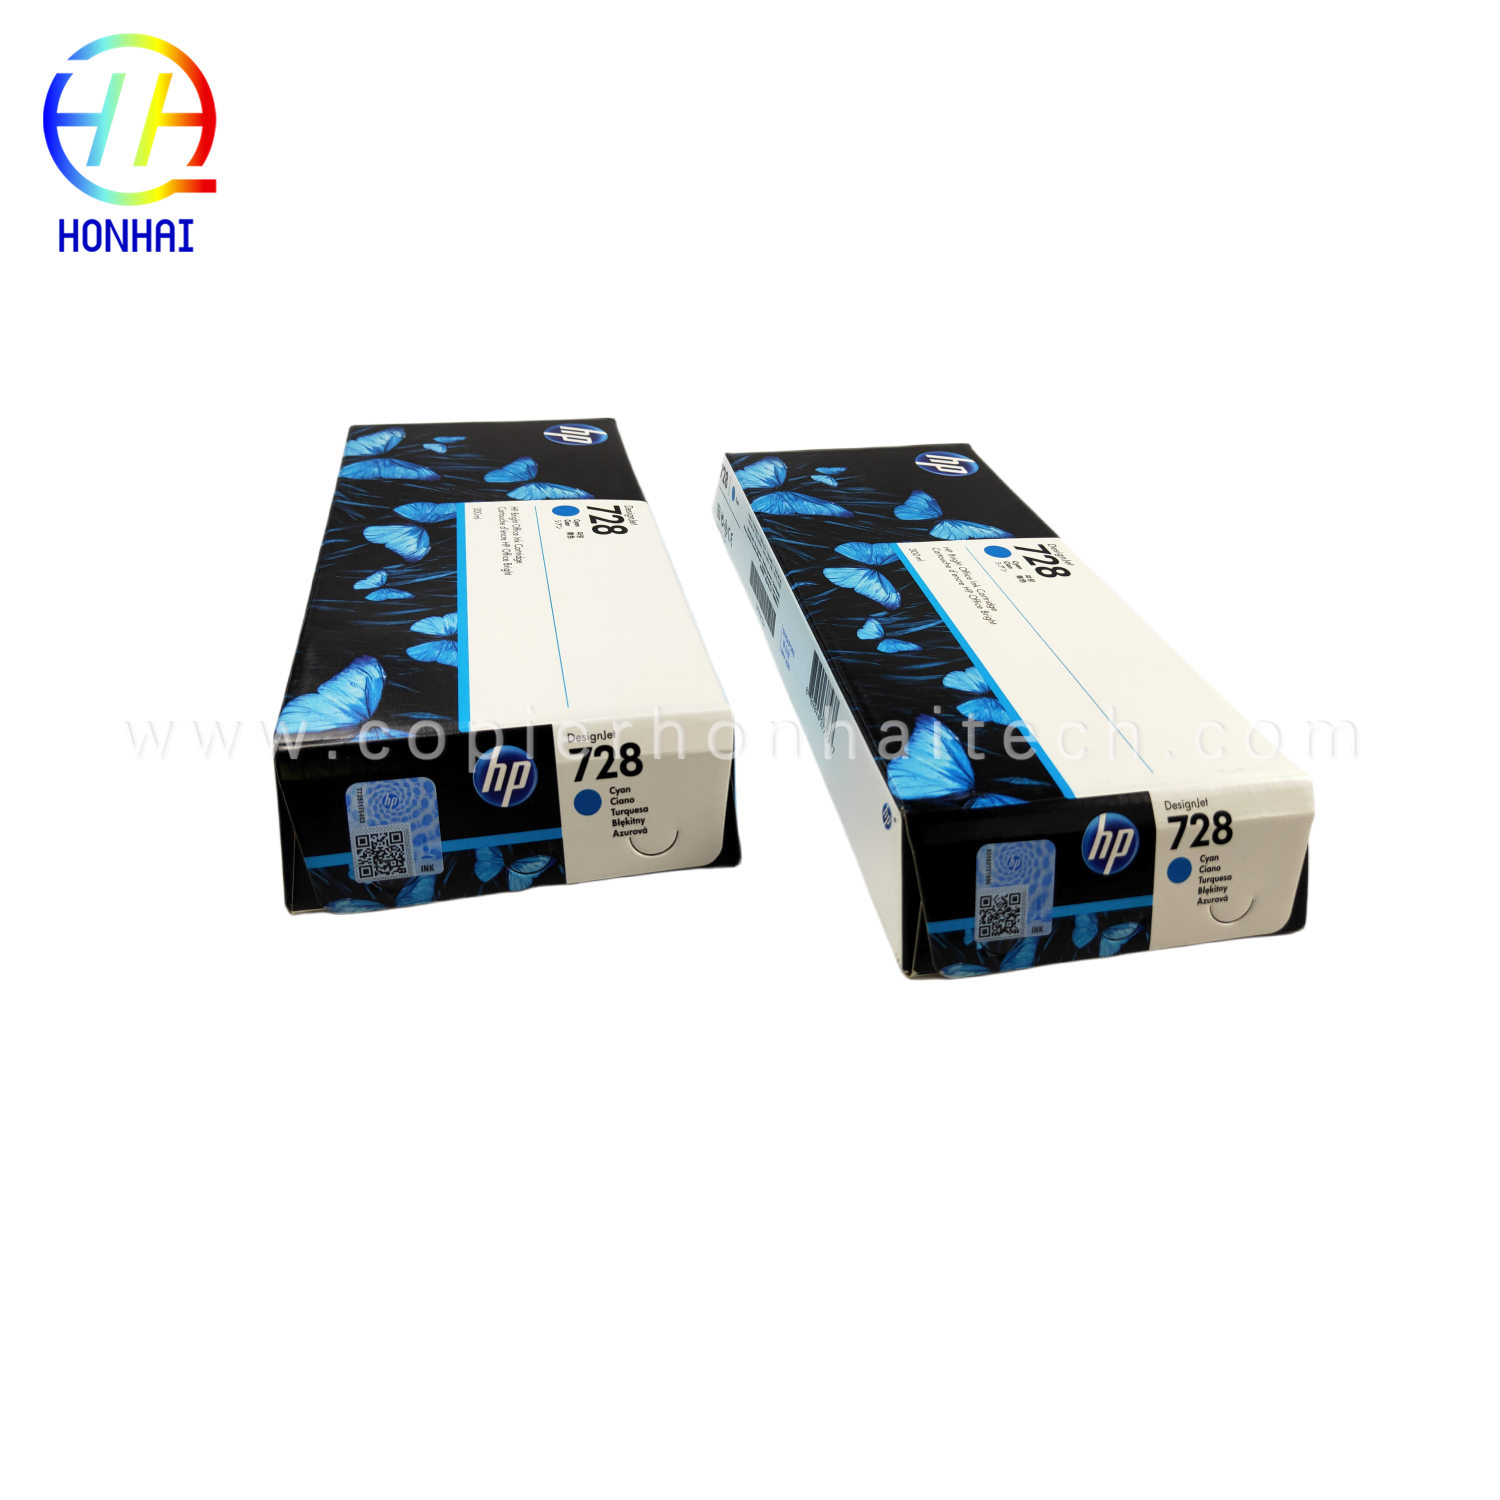 https://www.copierhonhaitech.com/original-new-ink-cartridge-cyan-for-hp-designjet-t730-and-t830-large-format-plotter-printers-and-hp-729-designjet-printhead- 728-f9k17a-termék/